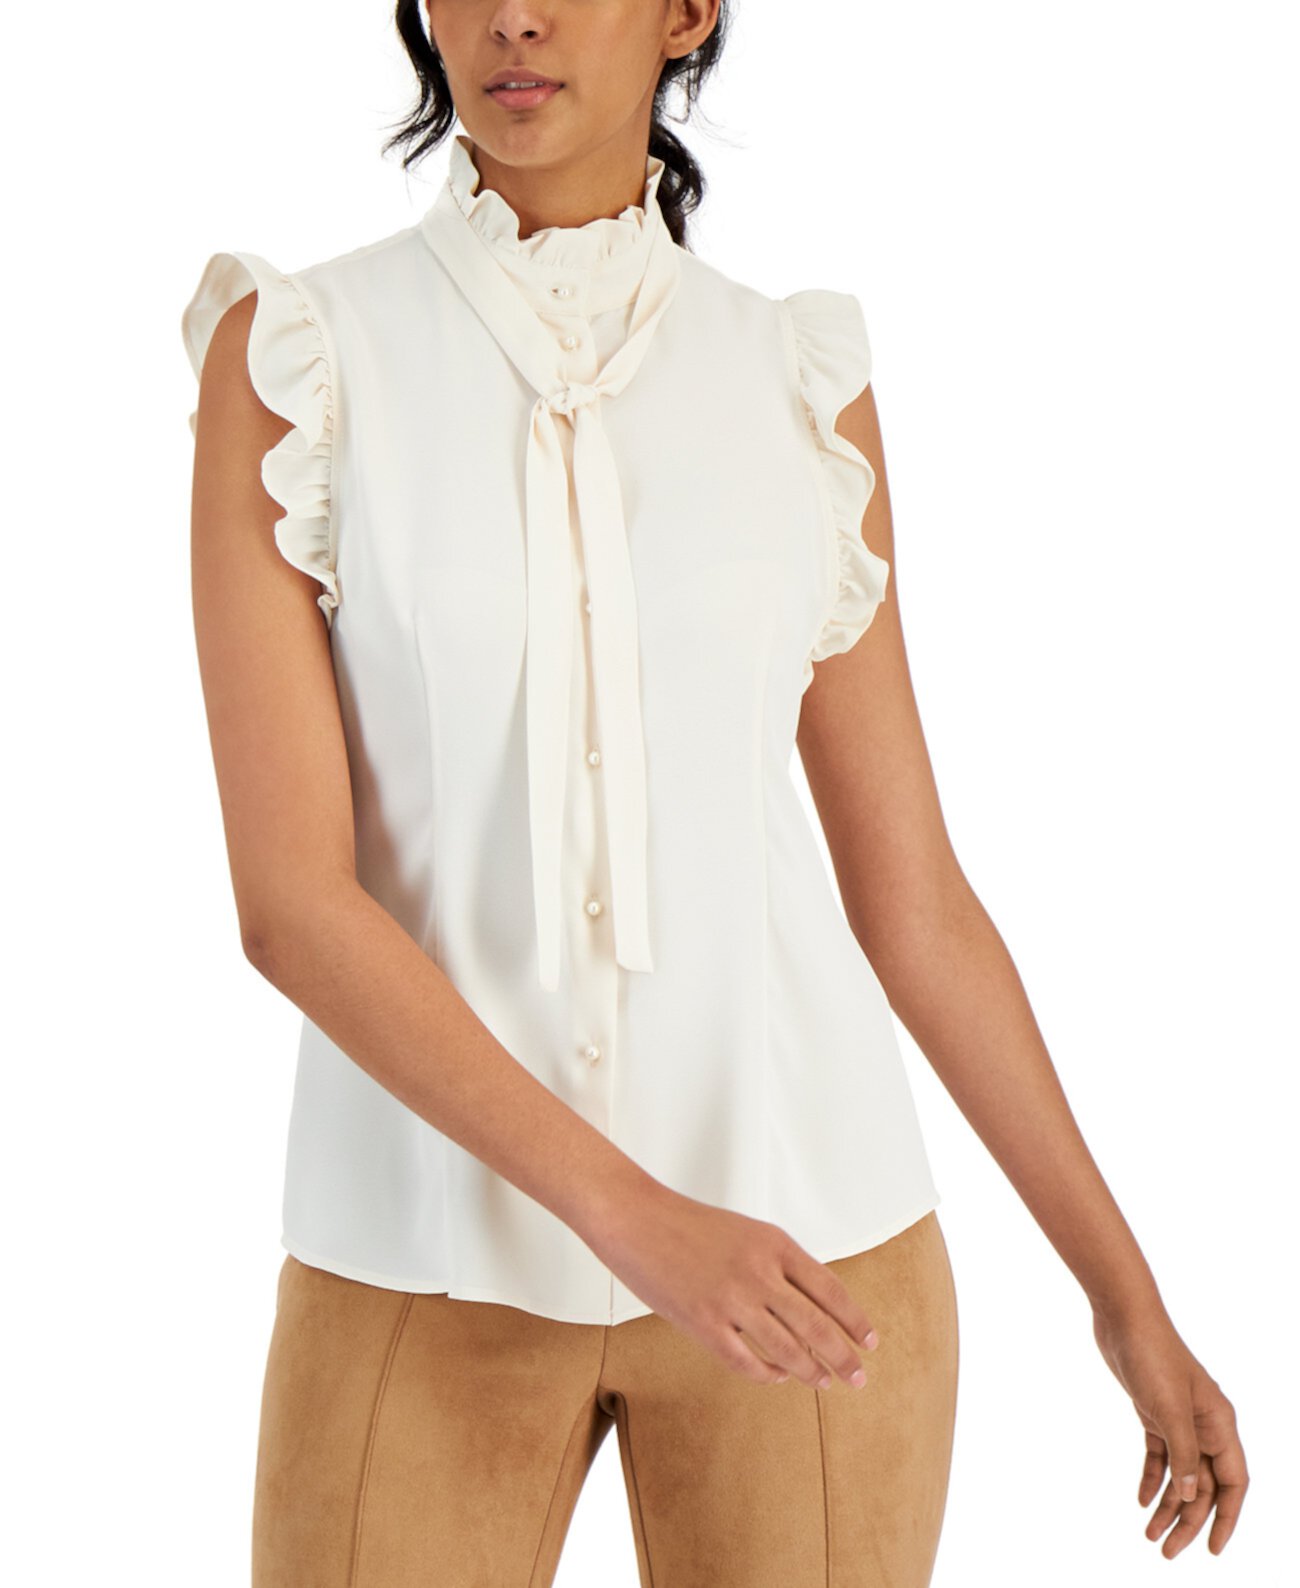 Женская блузка с рюшами и завязками на рукавах Anne Klein